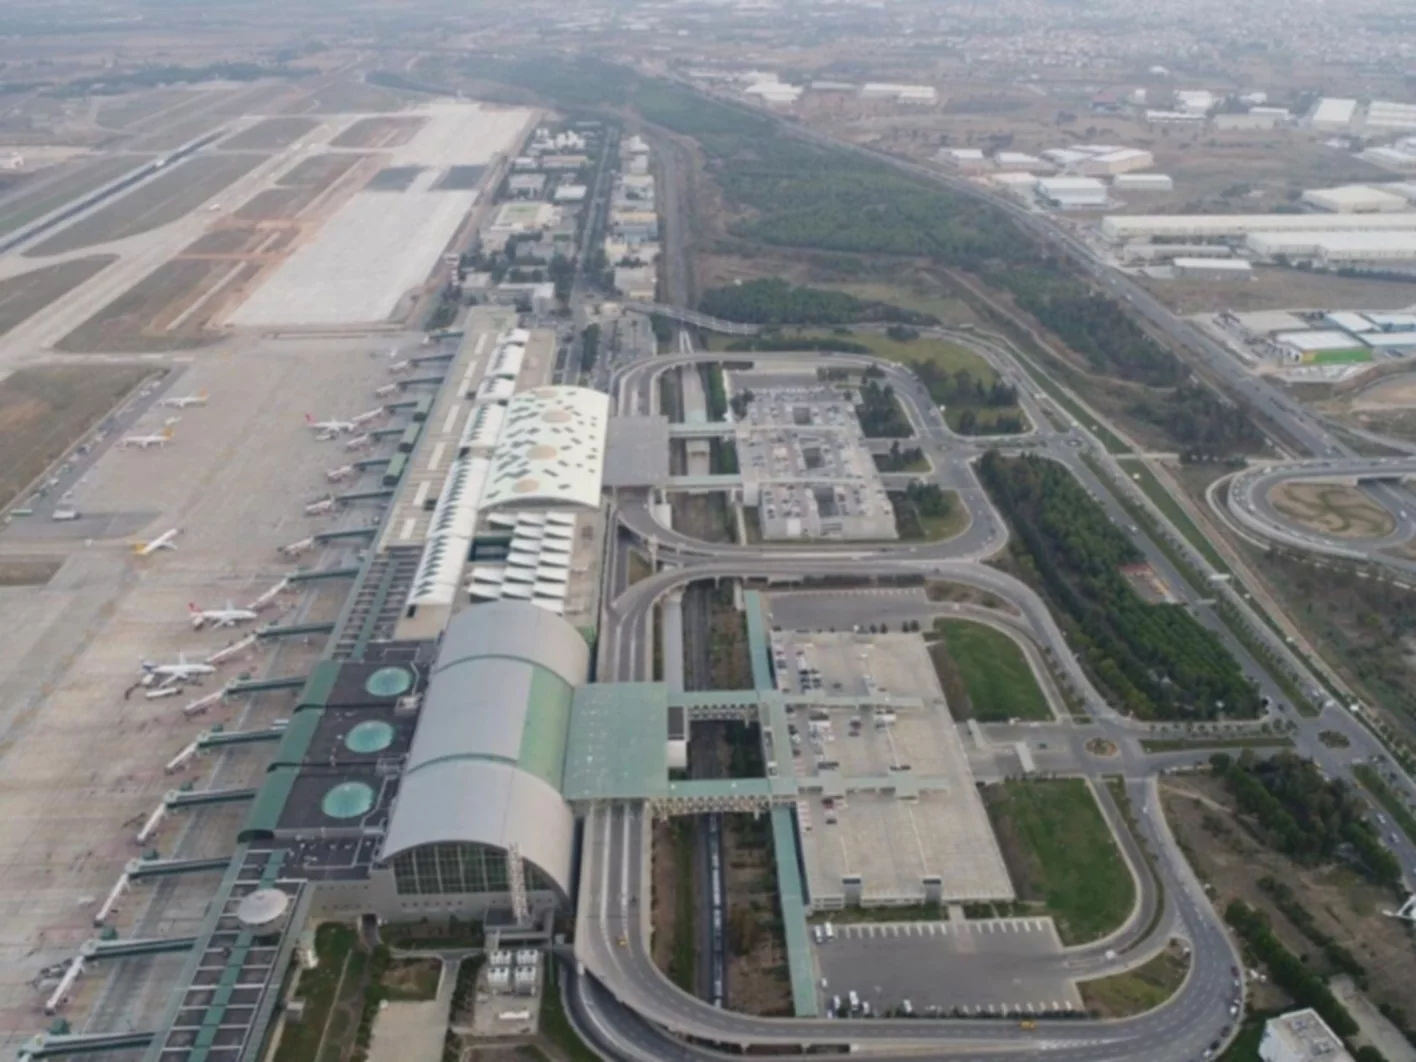 Adnan Menderes Havalimanı